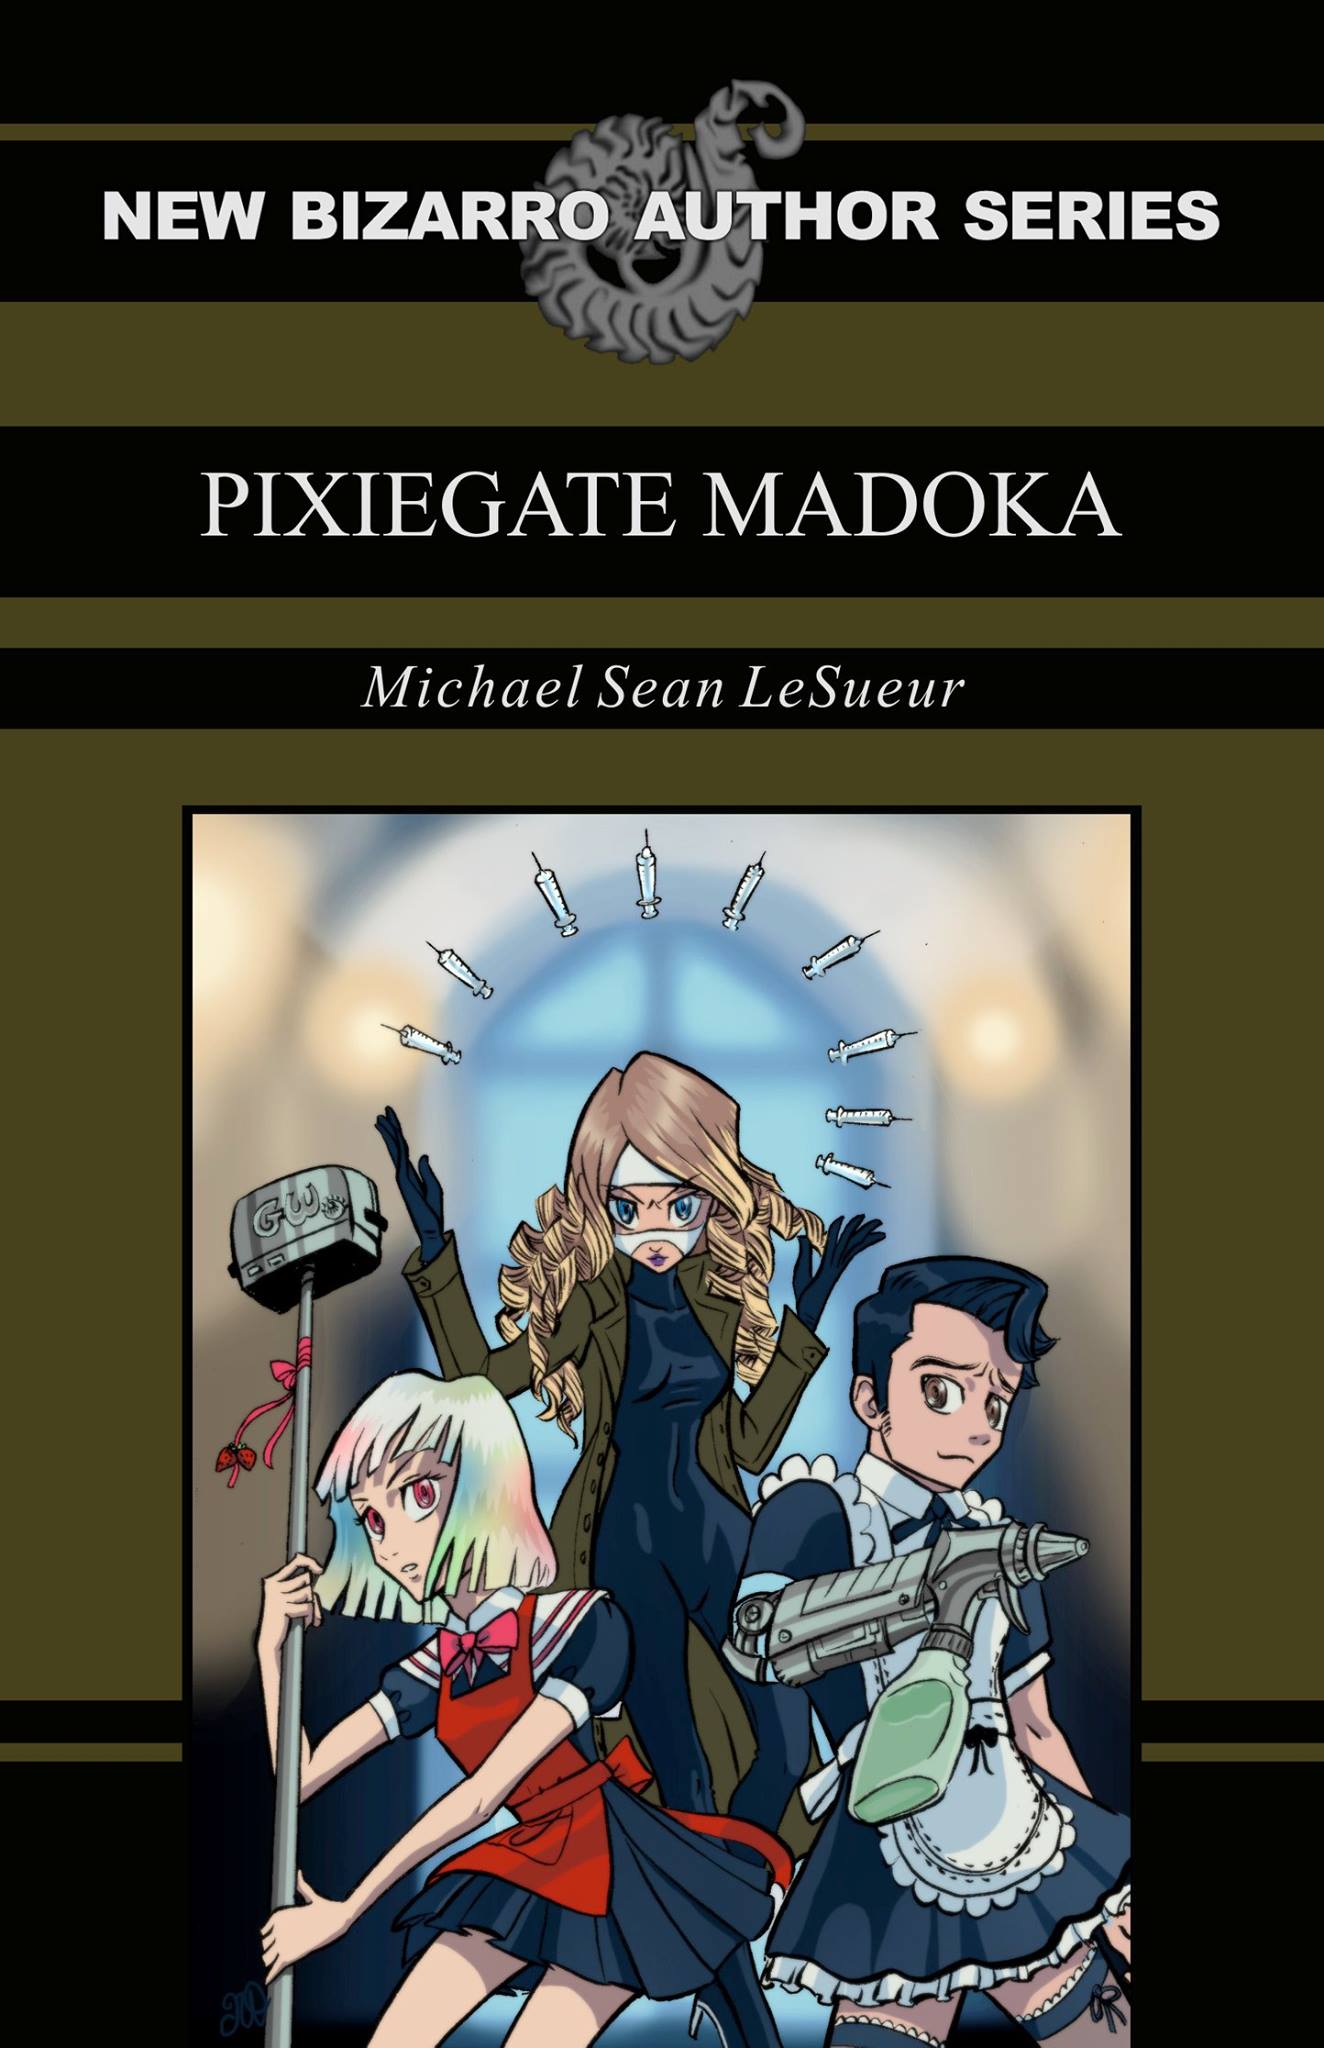 Pixiegate Madoka by Michael Sean LeSueur